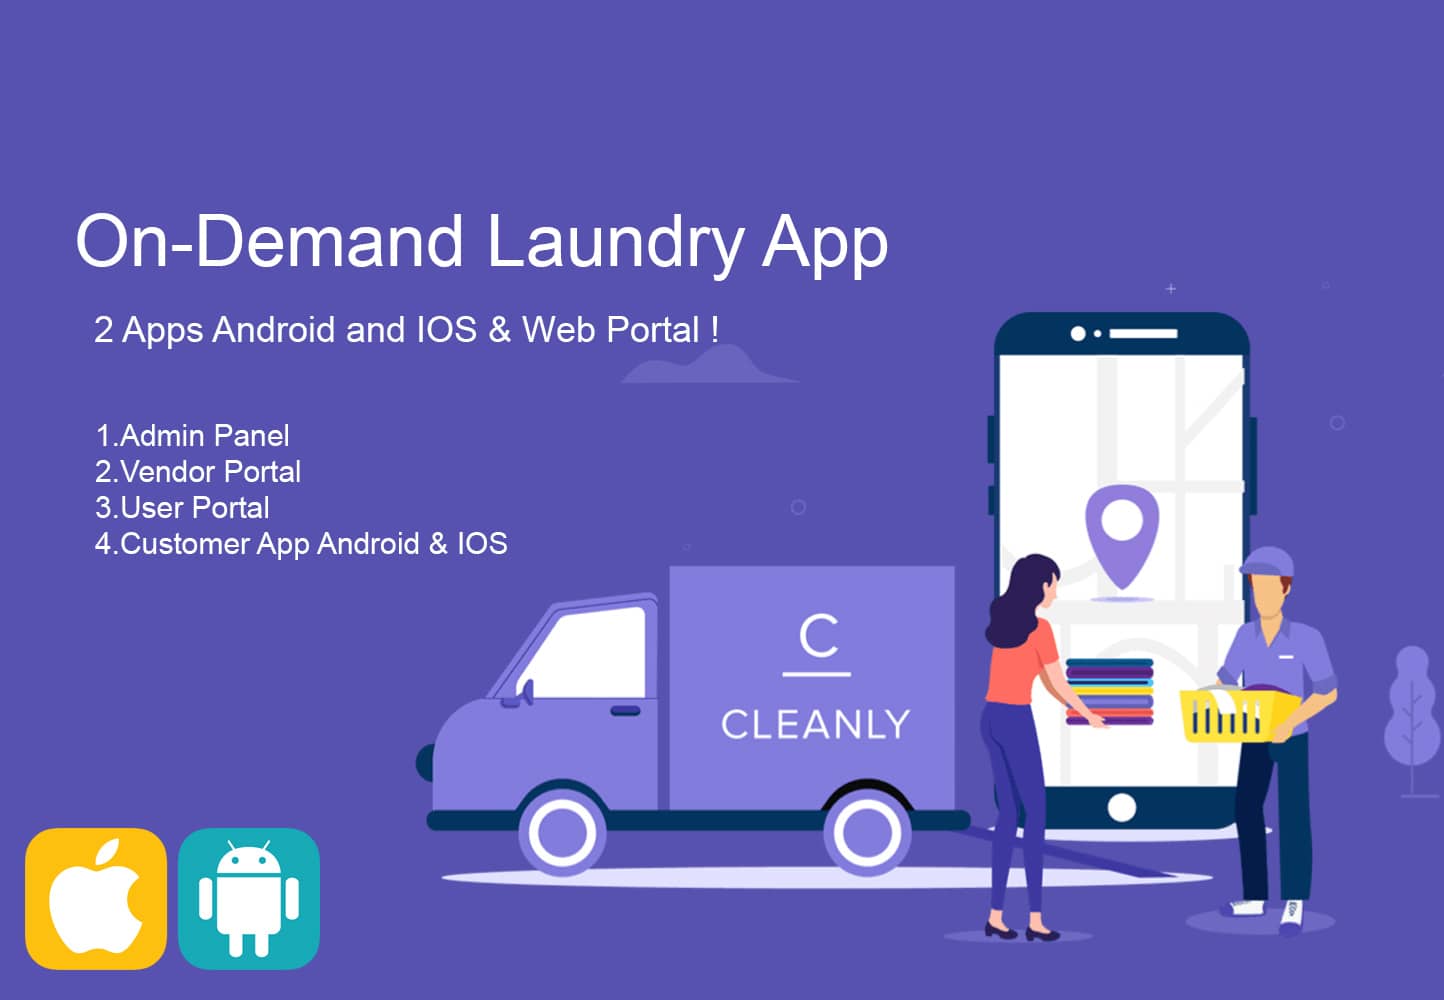 On-Demand Laundry App